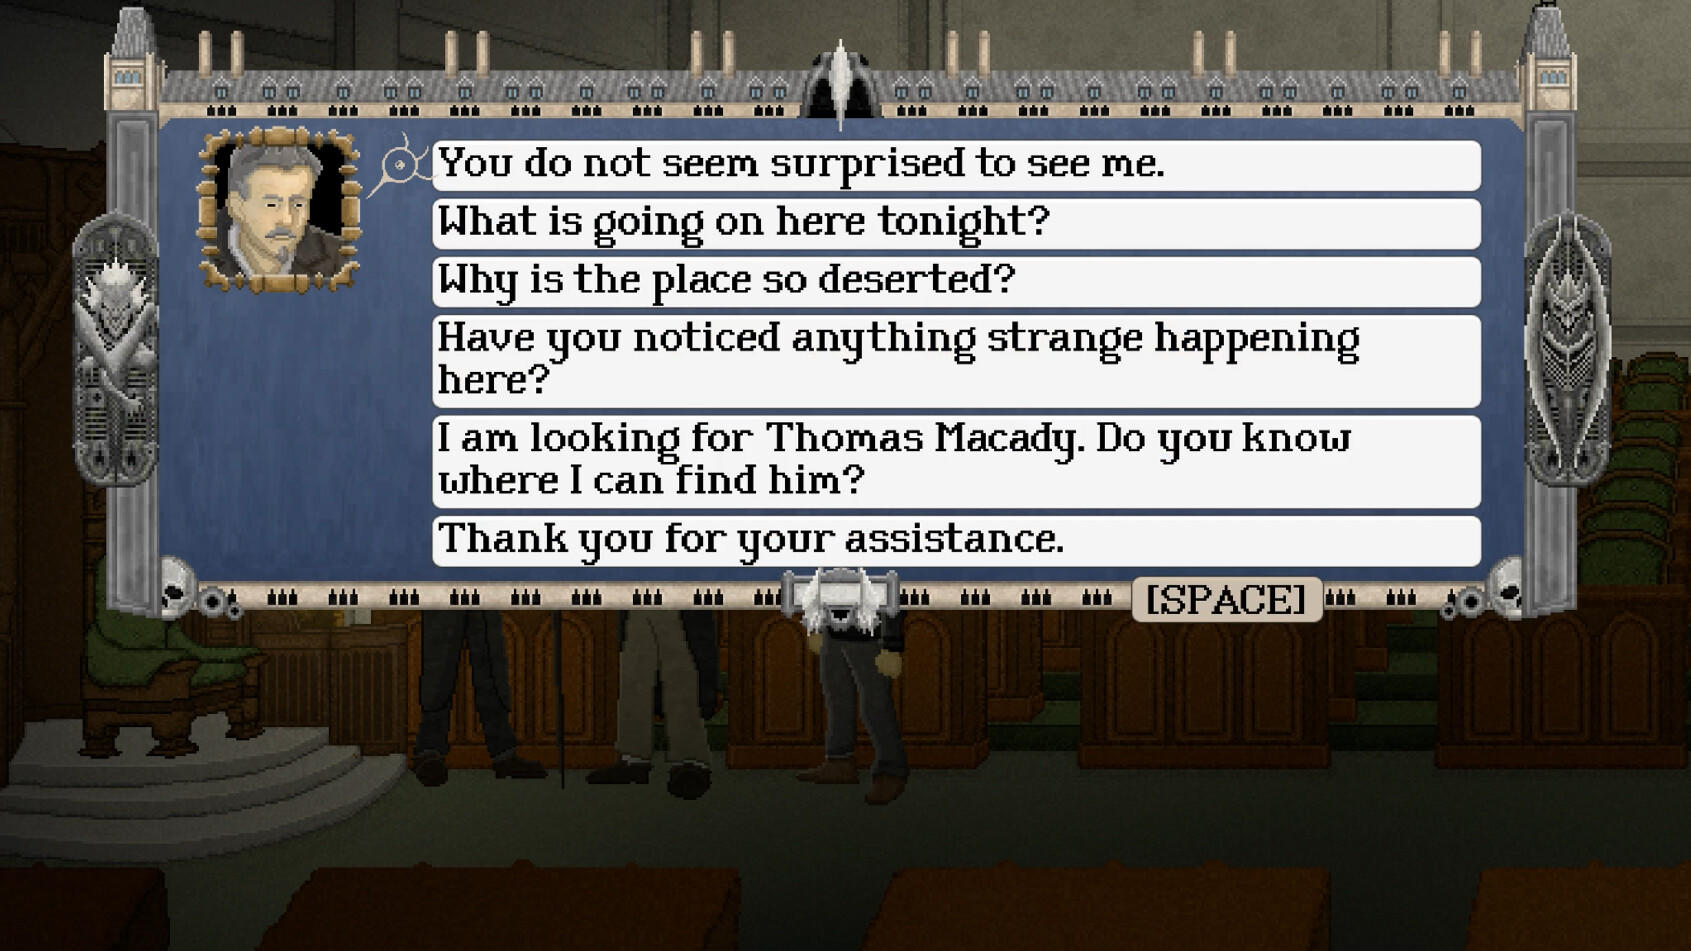 Asagos screenshot game